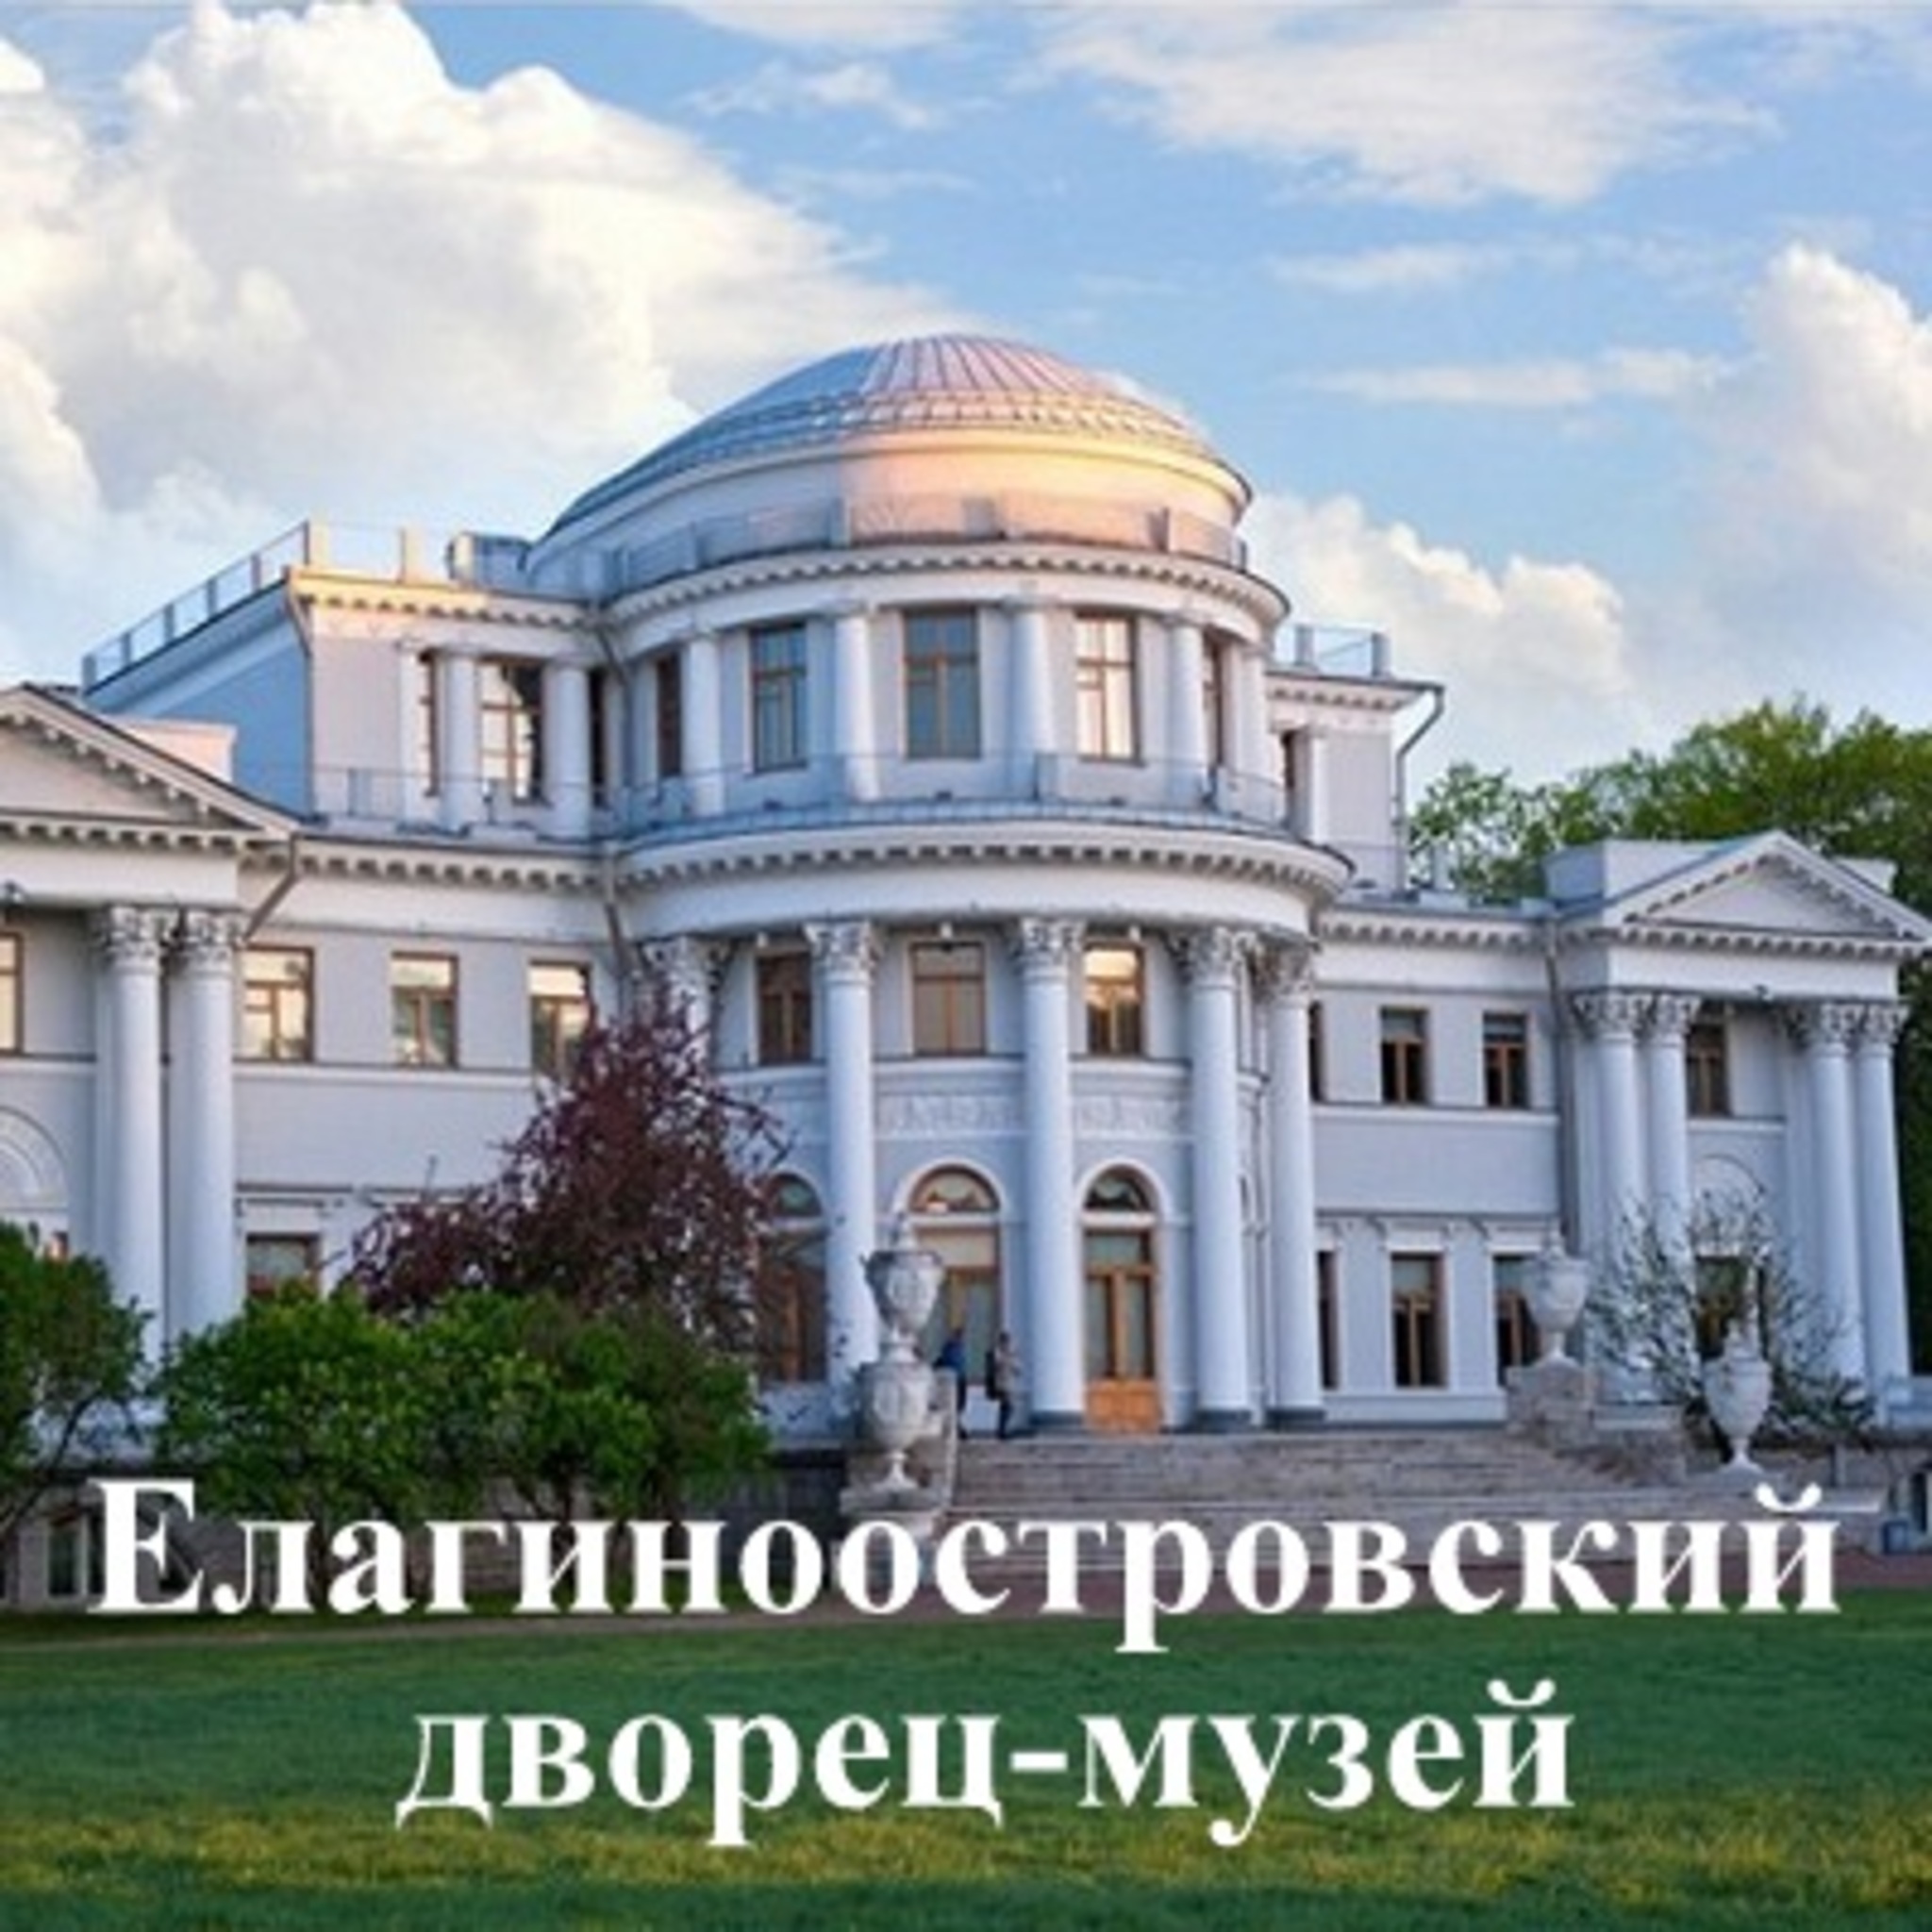 Elaginoostrovsky Palace-Museum